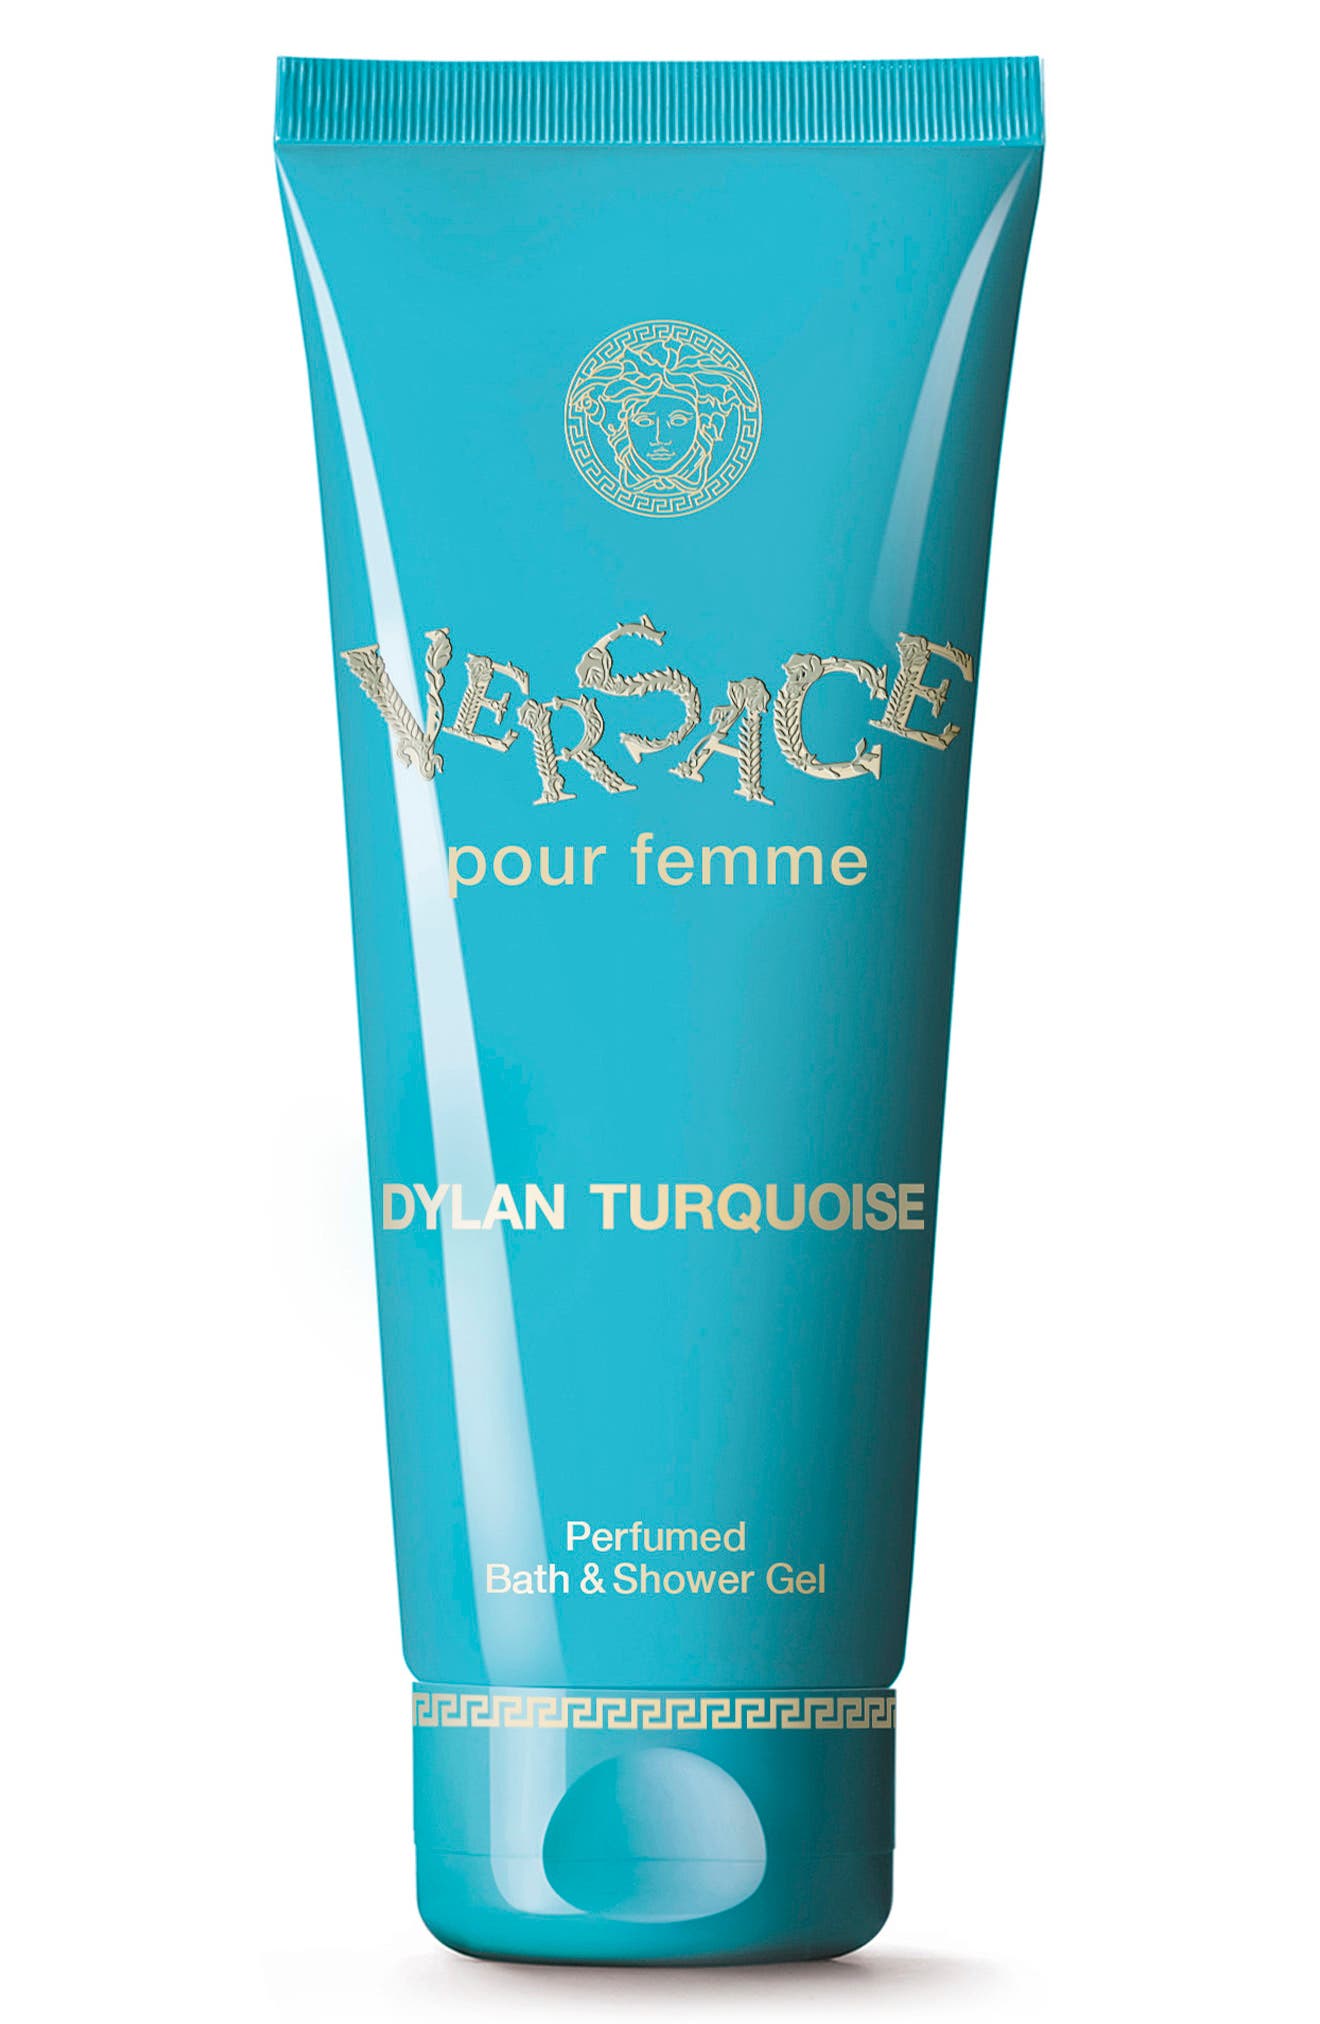 Versace Dylan Turquoise Perfumed Bath & Shower Gel at Nordstrom, Size 6.7 Oz